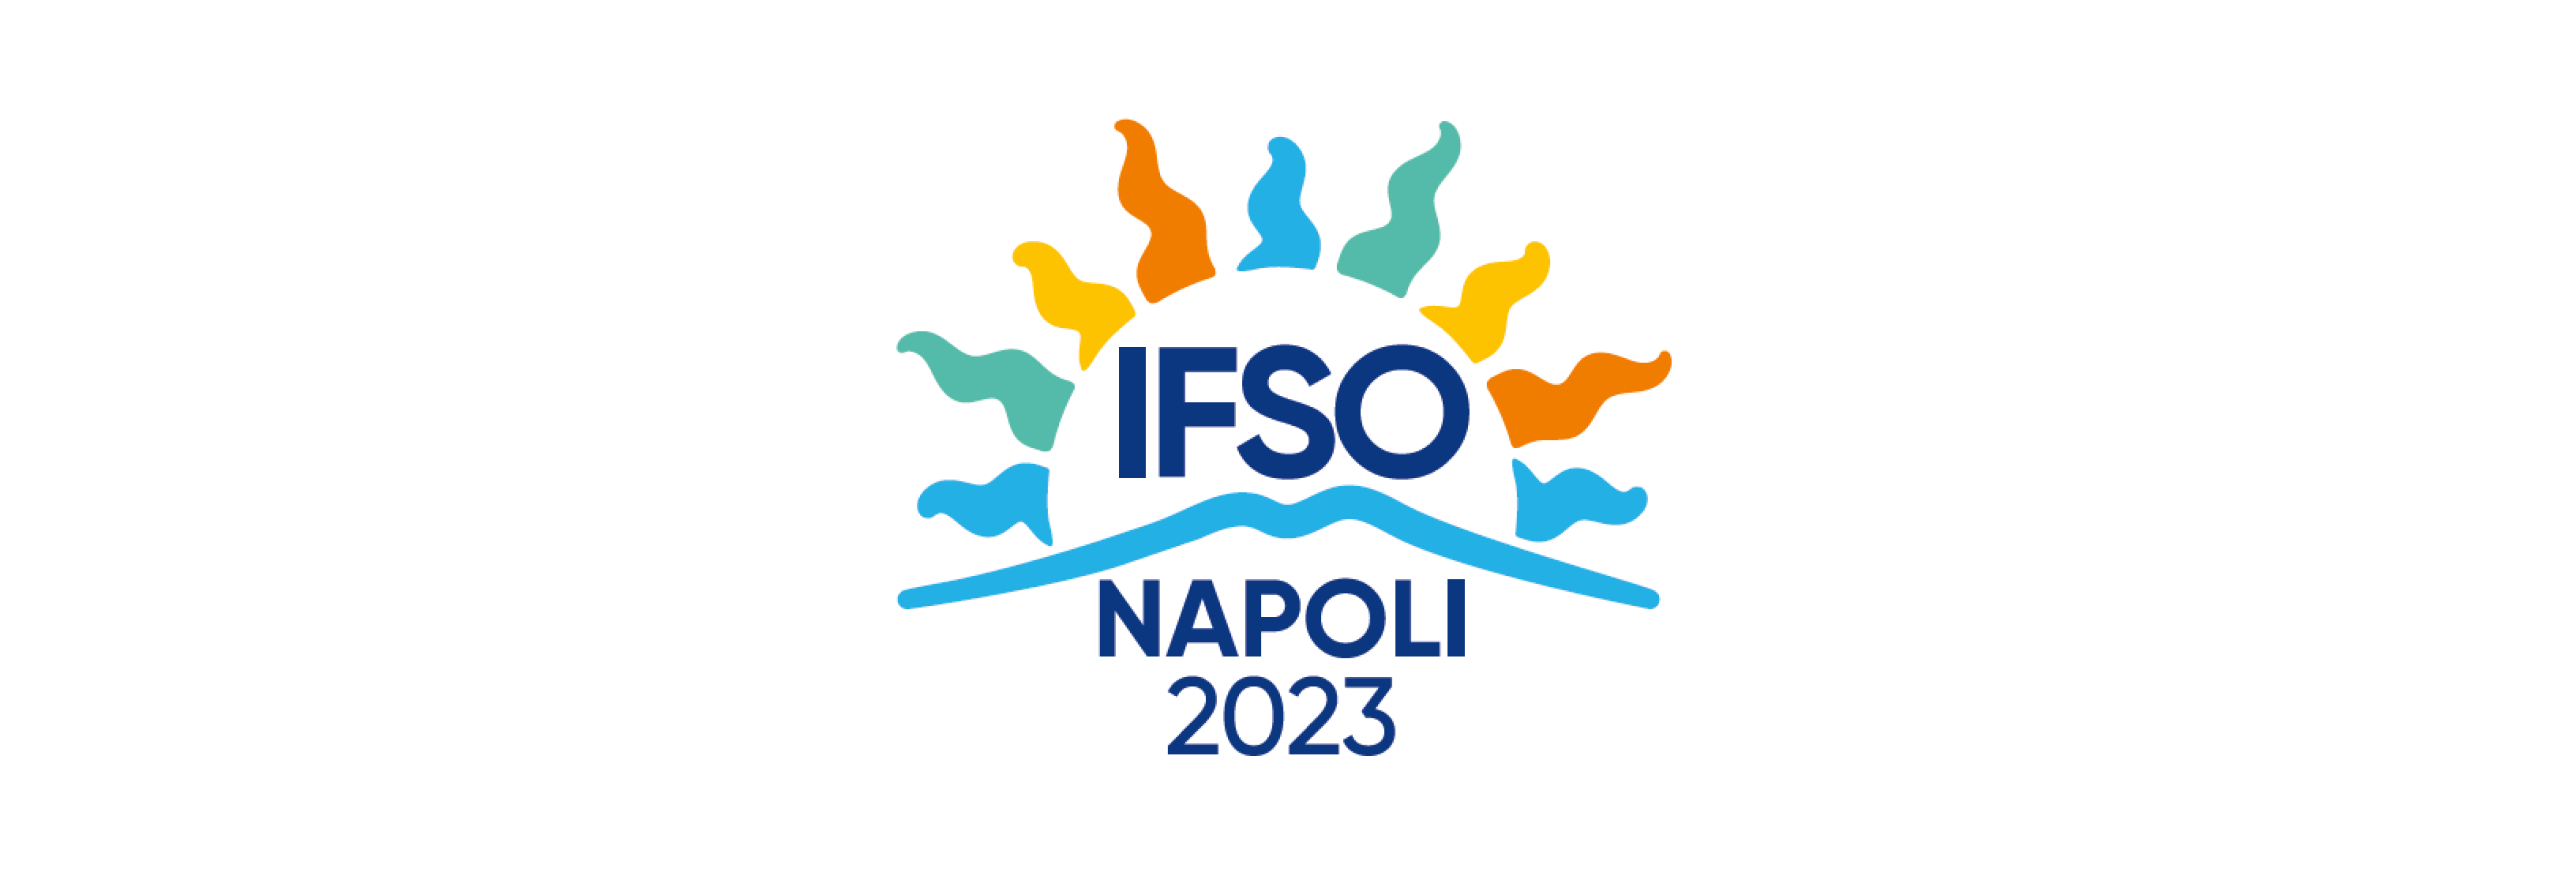 IFSO - Napoli Header Image.png